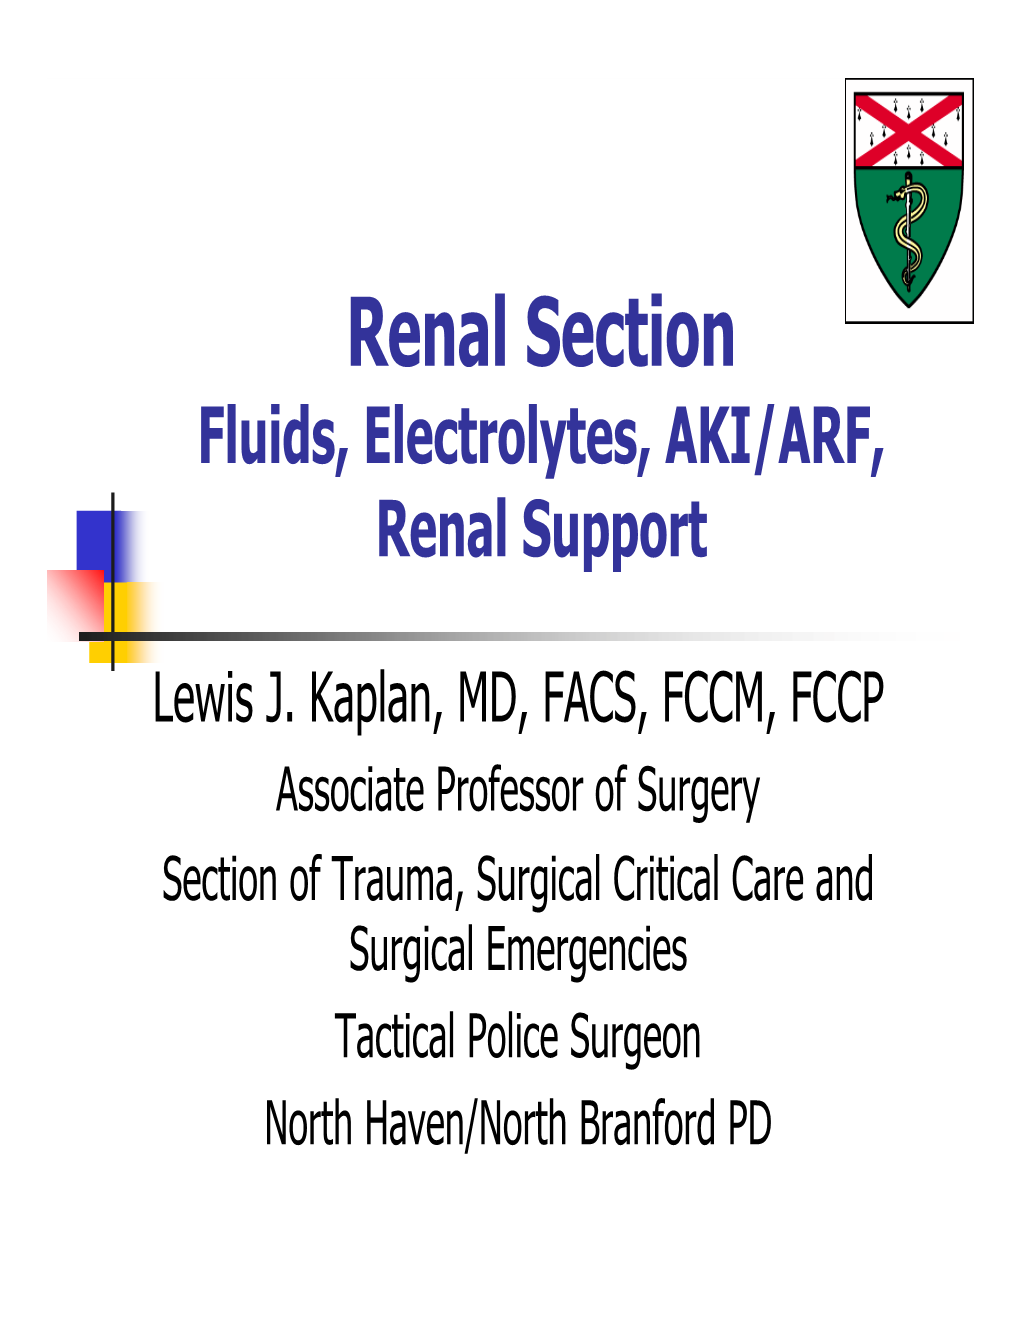 Renal Section Fluids, Electrolytes, AKI/ARF, Renal Support